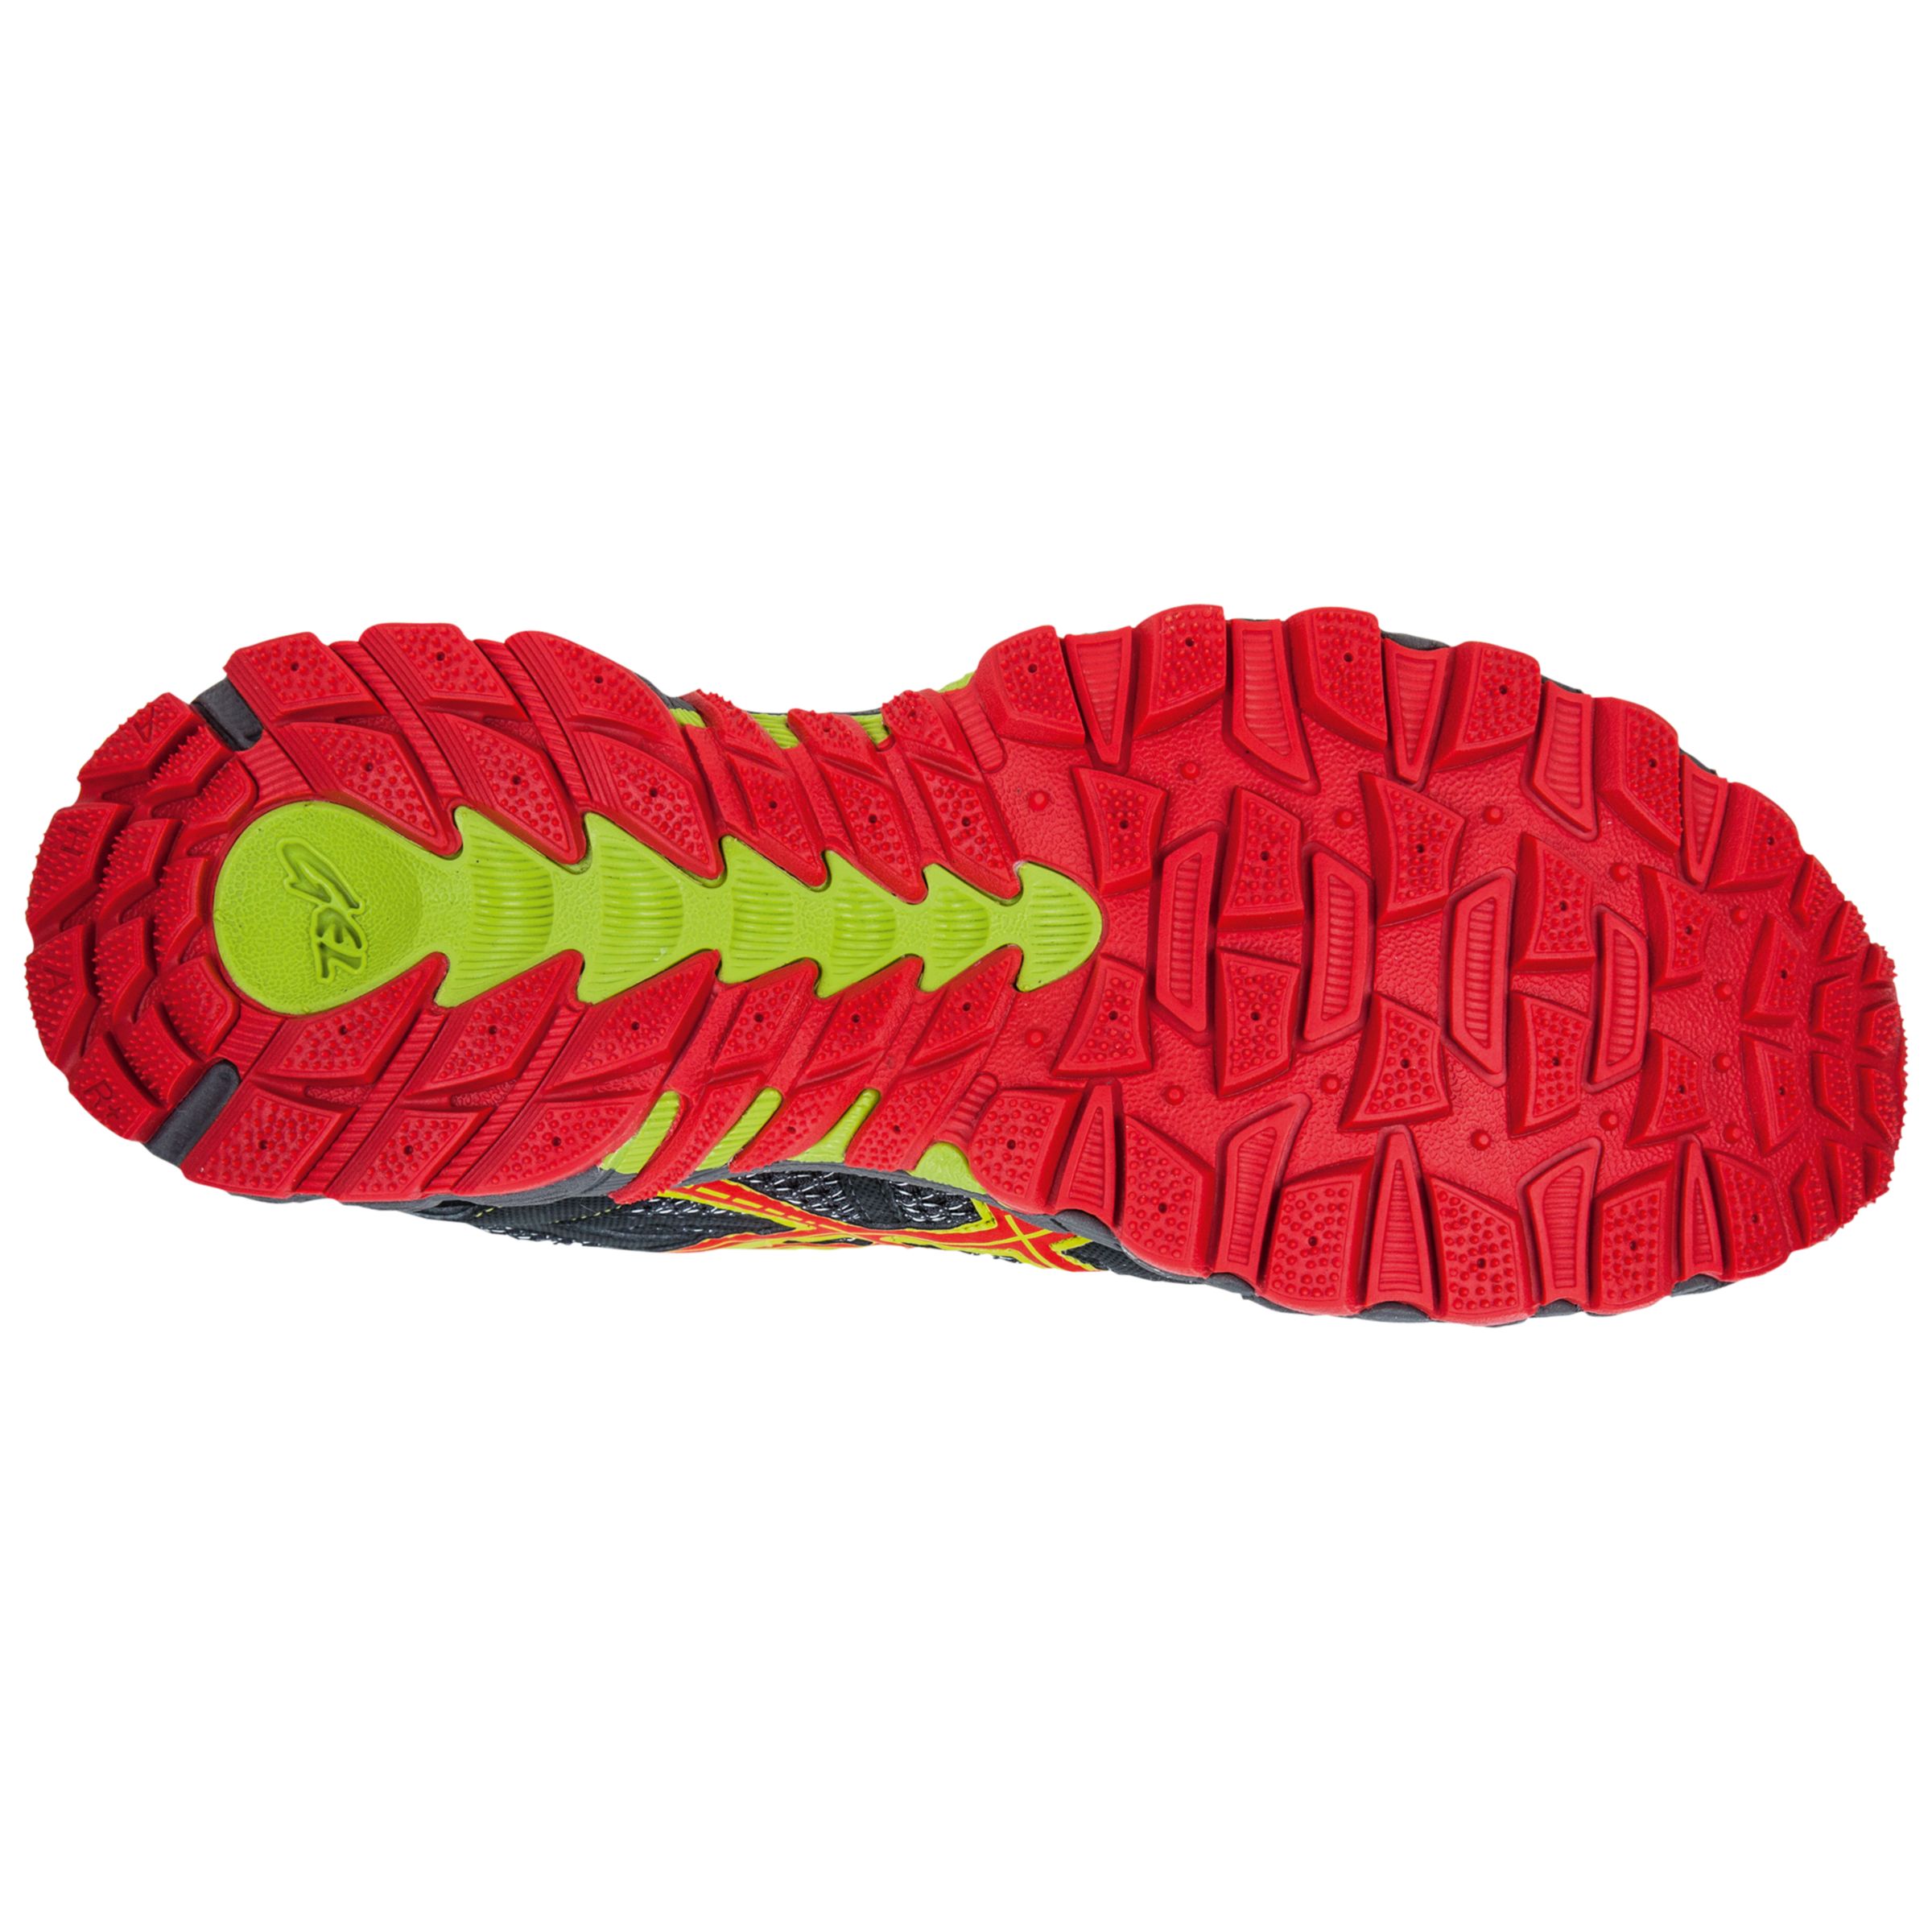 Asics Lahar 5 GTX Trail Running Shoes, Grey/Red